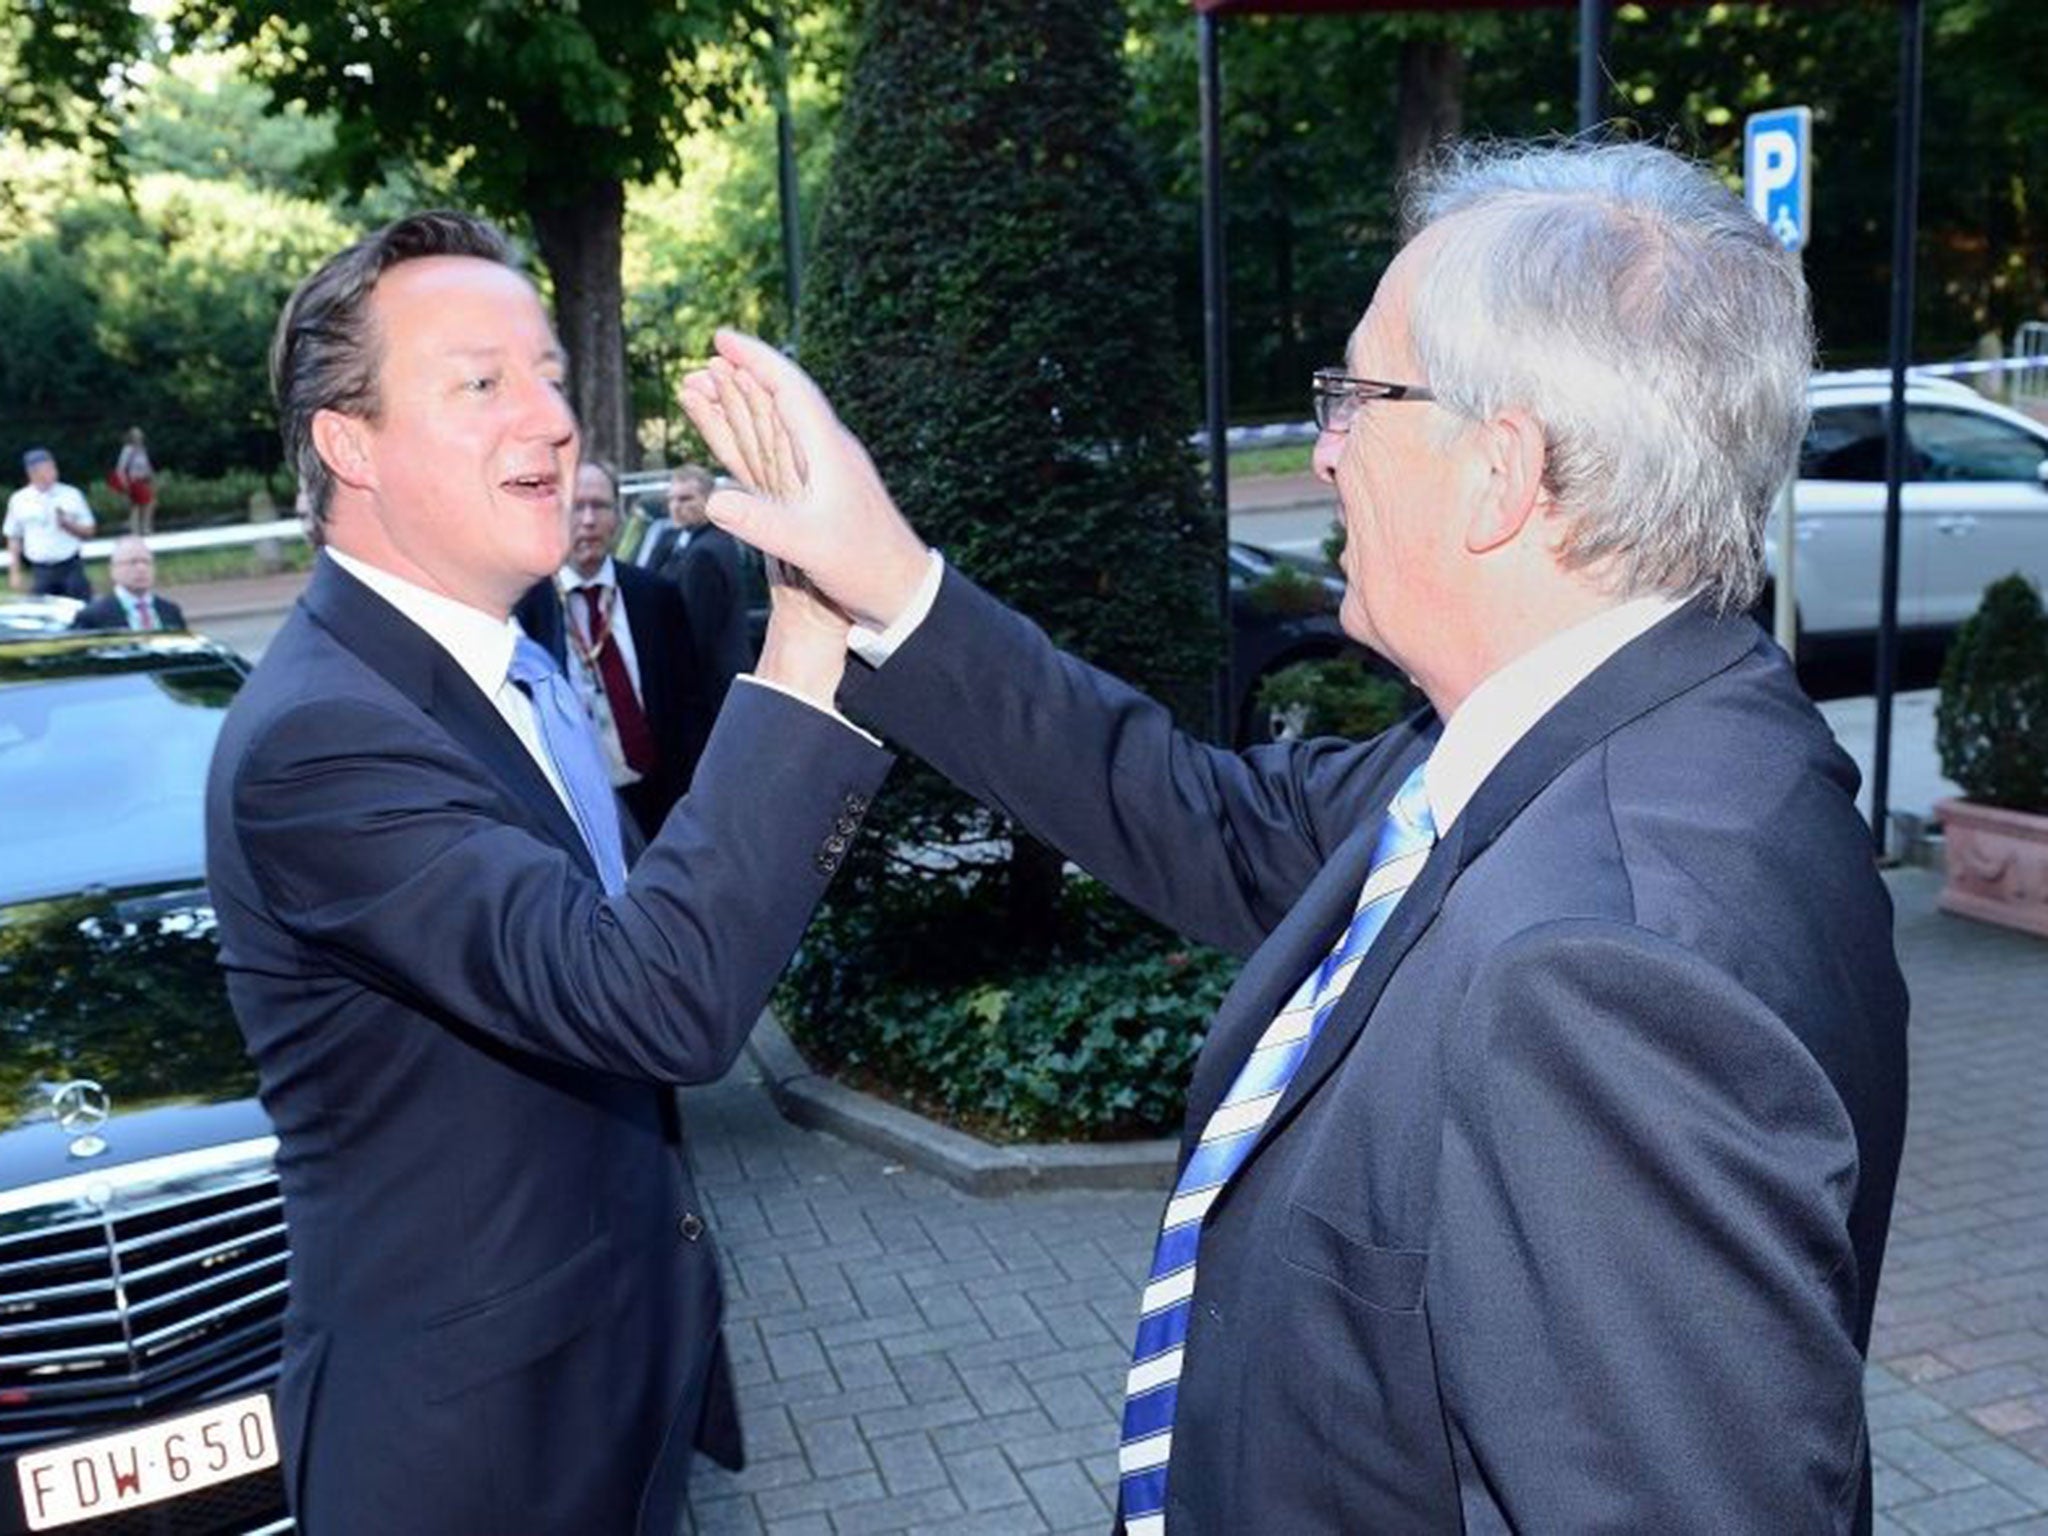 European Union handout photo of Jean-Claude Juncker receiving Prime Minister David Cameron at the European Parliament in Brussels, Belgium.